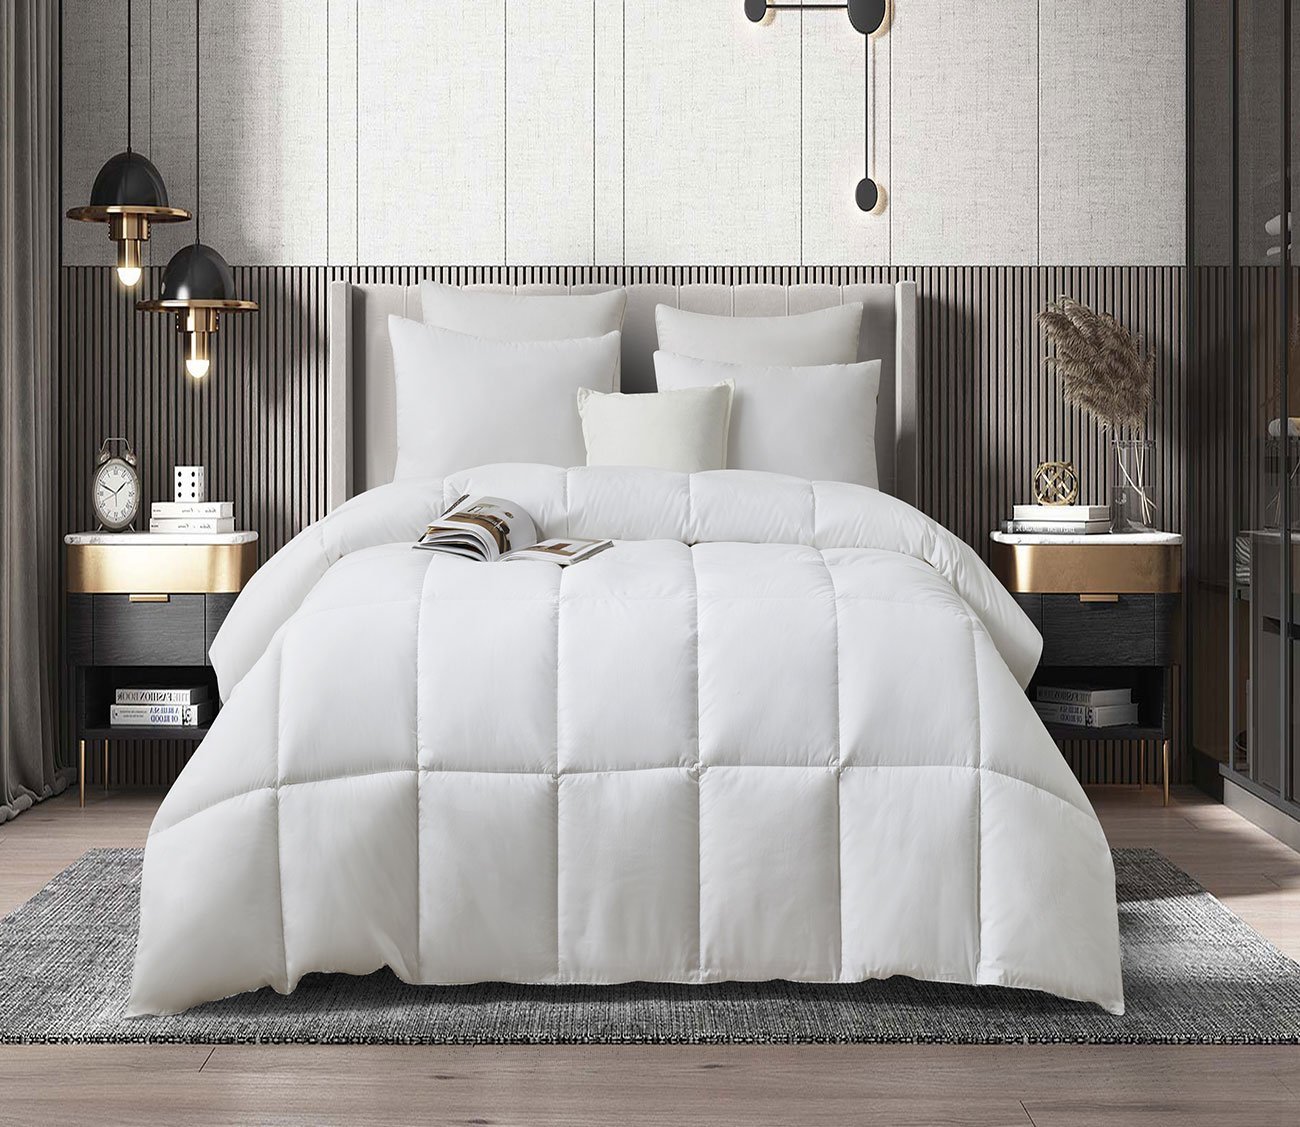 Comfort Classics 3M Thinsulate Down Alternative Comforter, Level 3